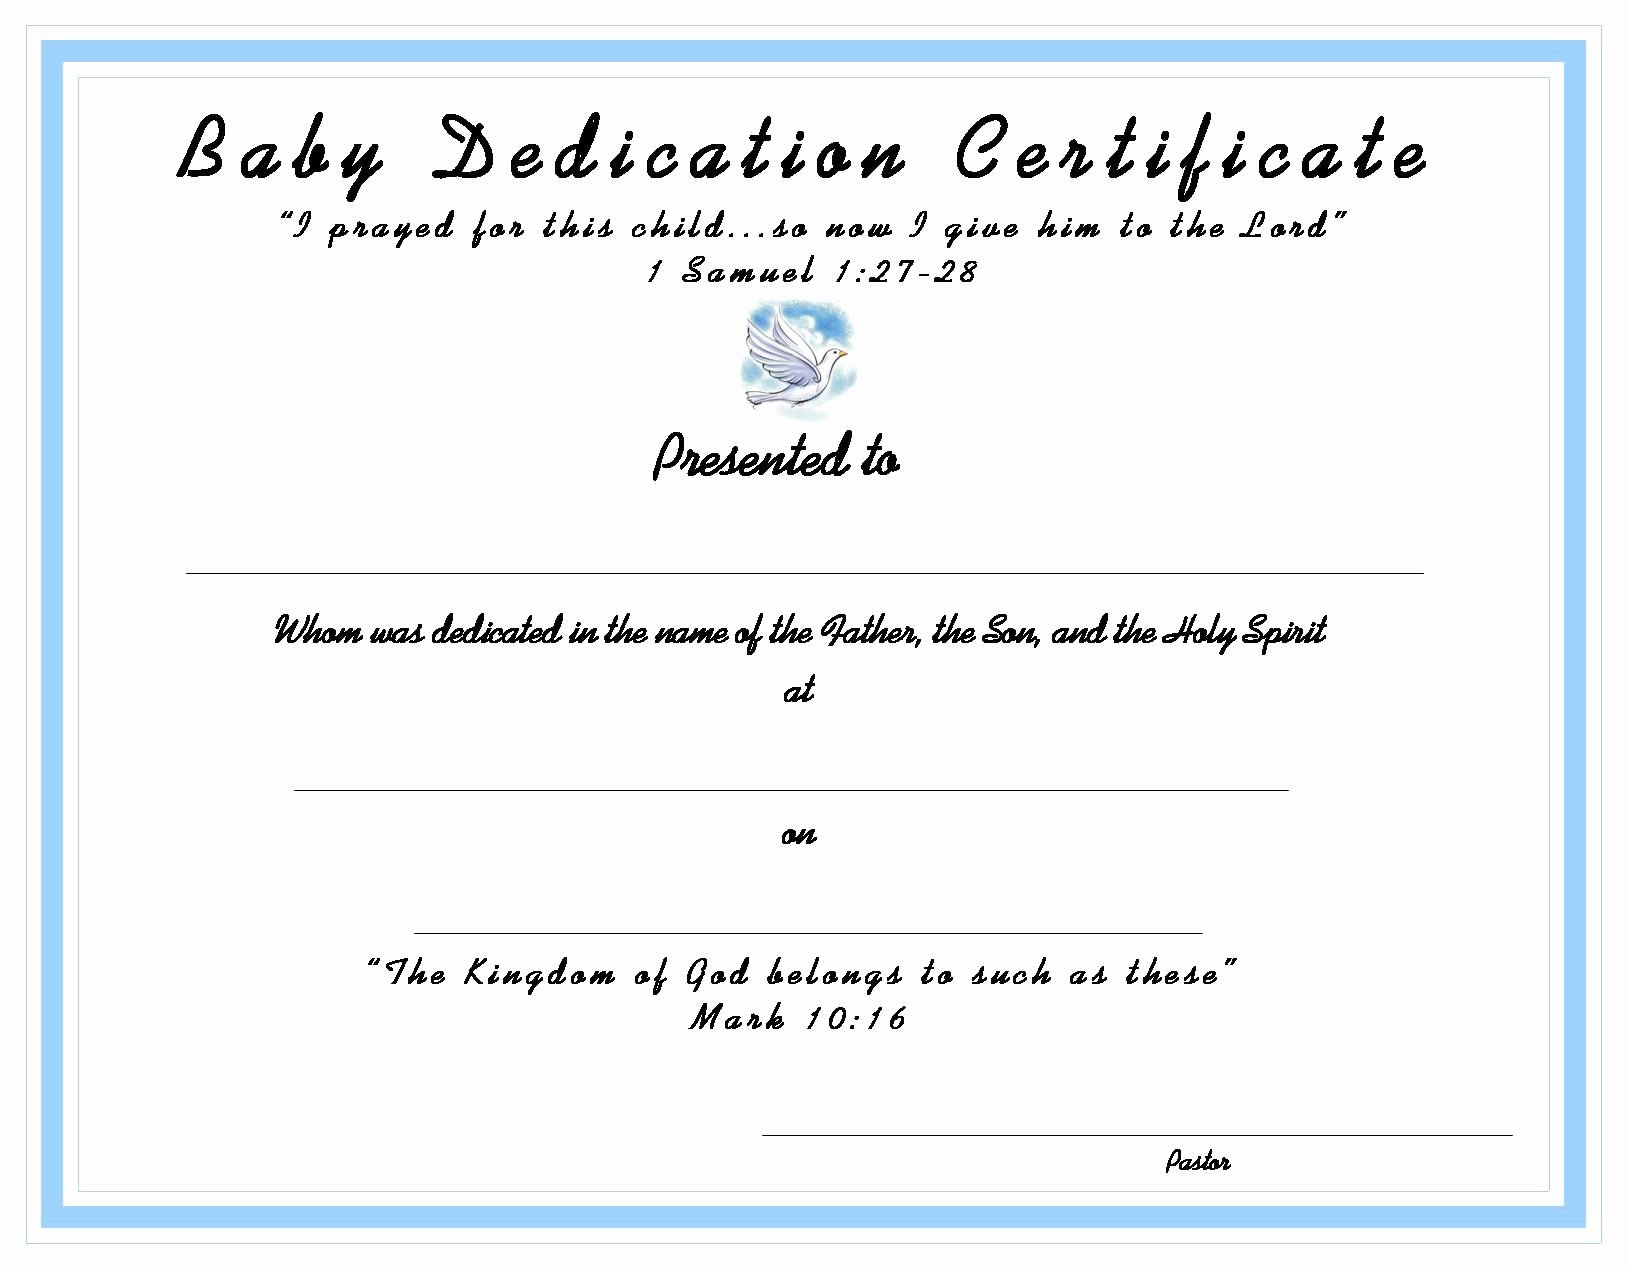 Child Dedication Certificate Editable Inspirational Baby Dedication Certificate